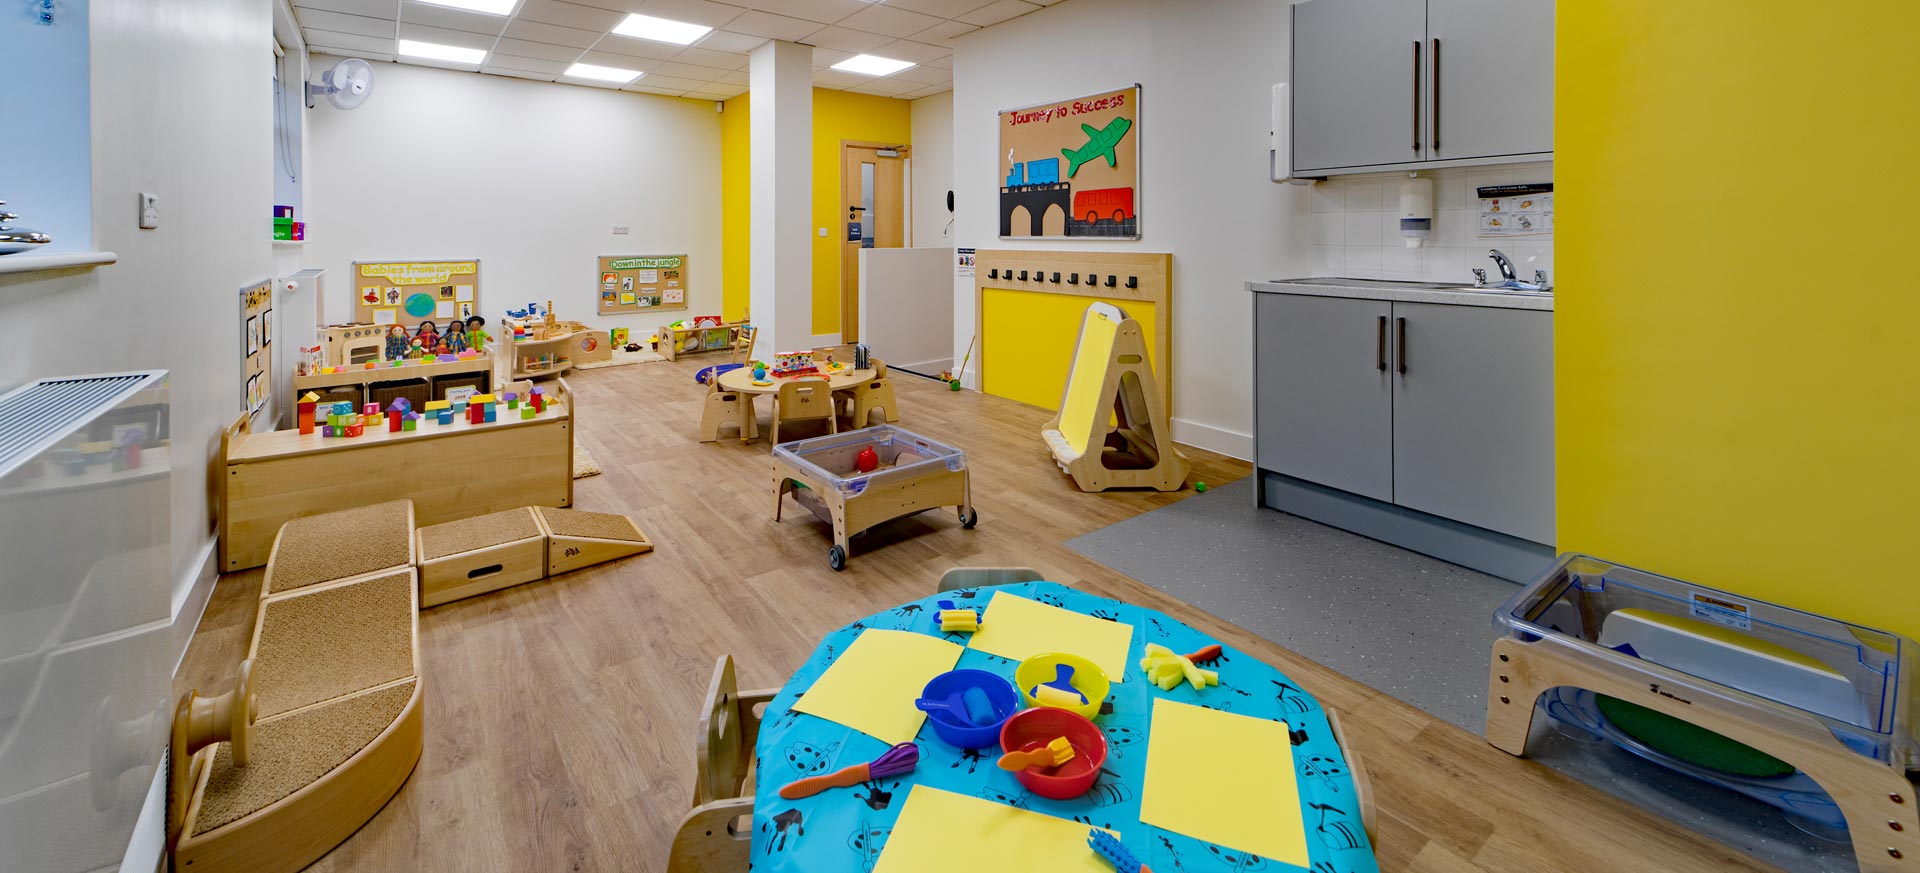 Maidenhead Day Nursery and Preschool